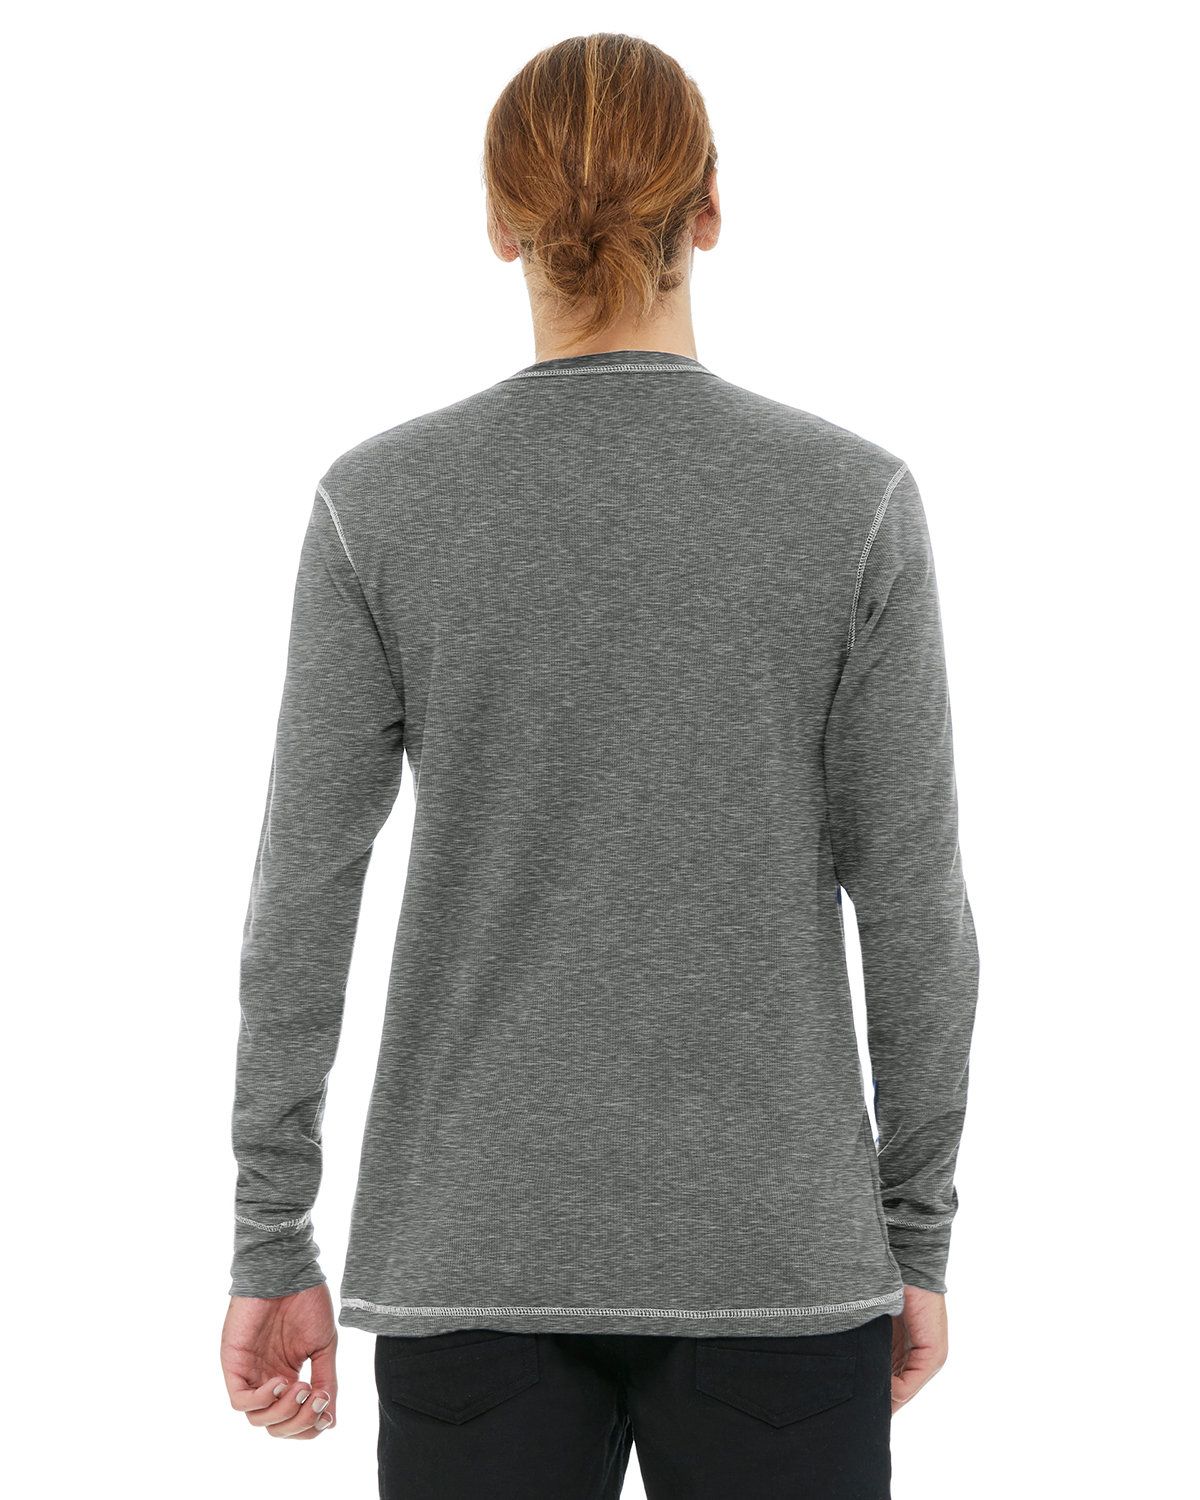 'Bella Canvas 3500 Men's Thermal Long-Sleeve T-Shirt'